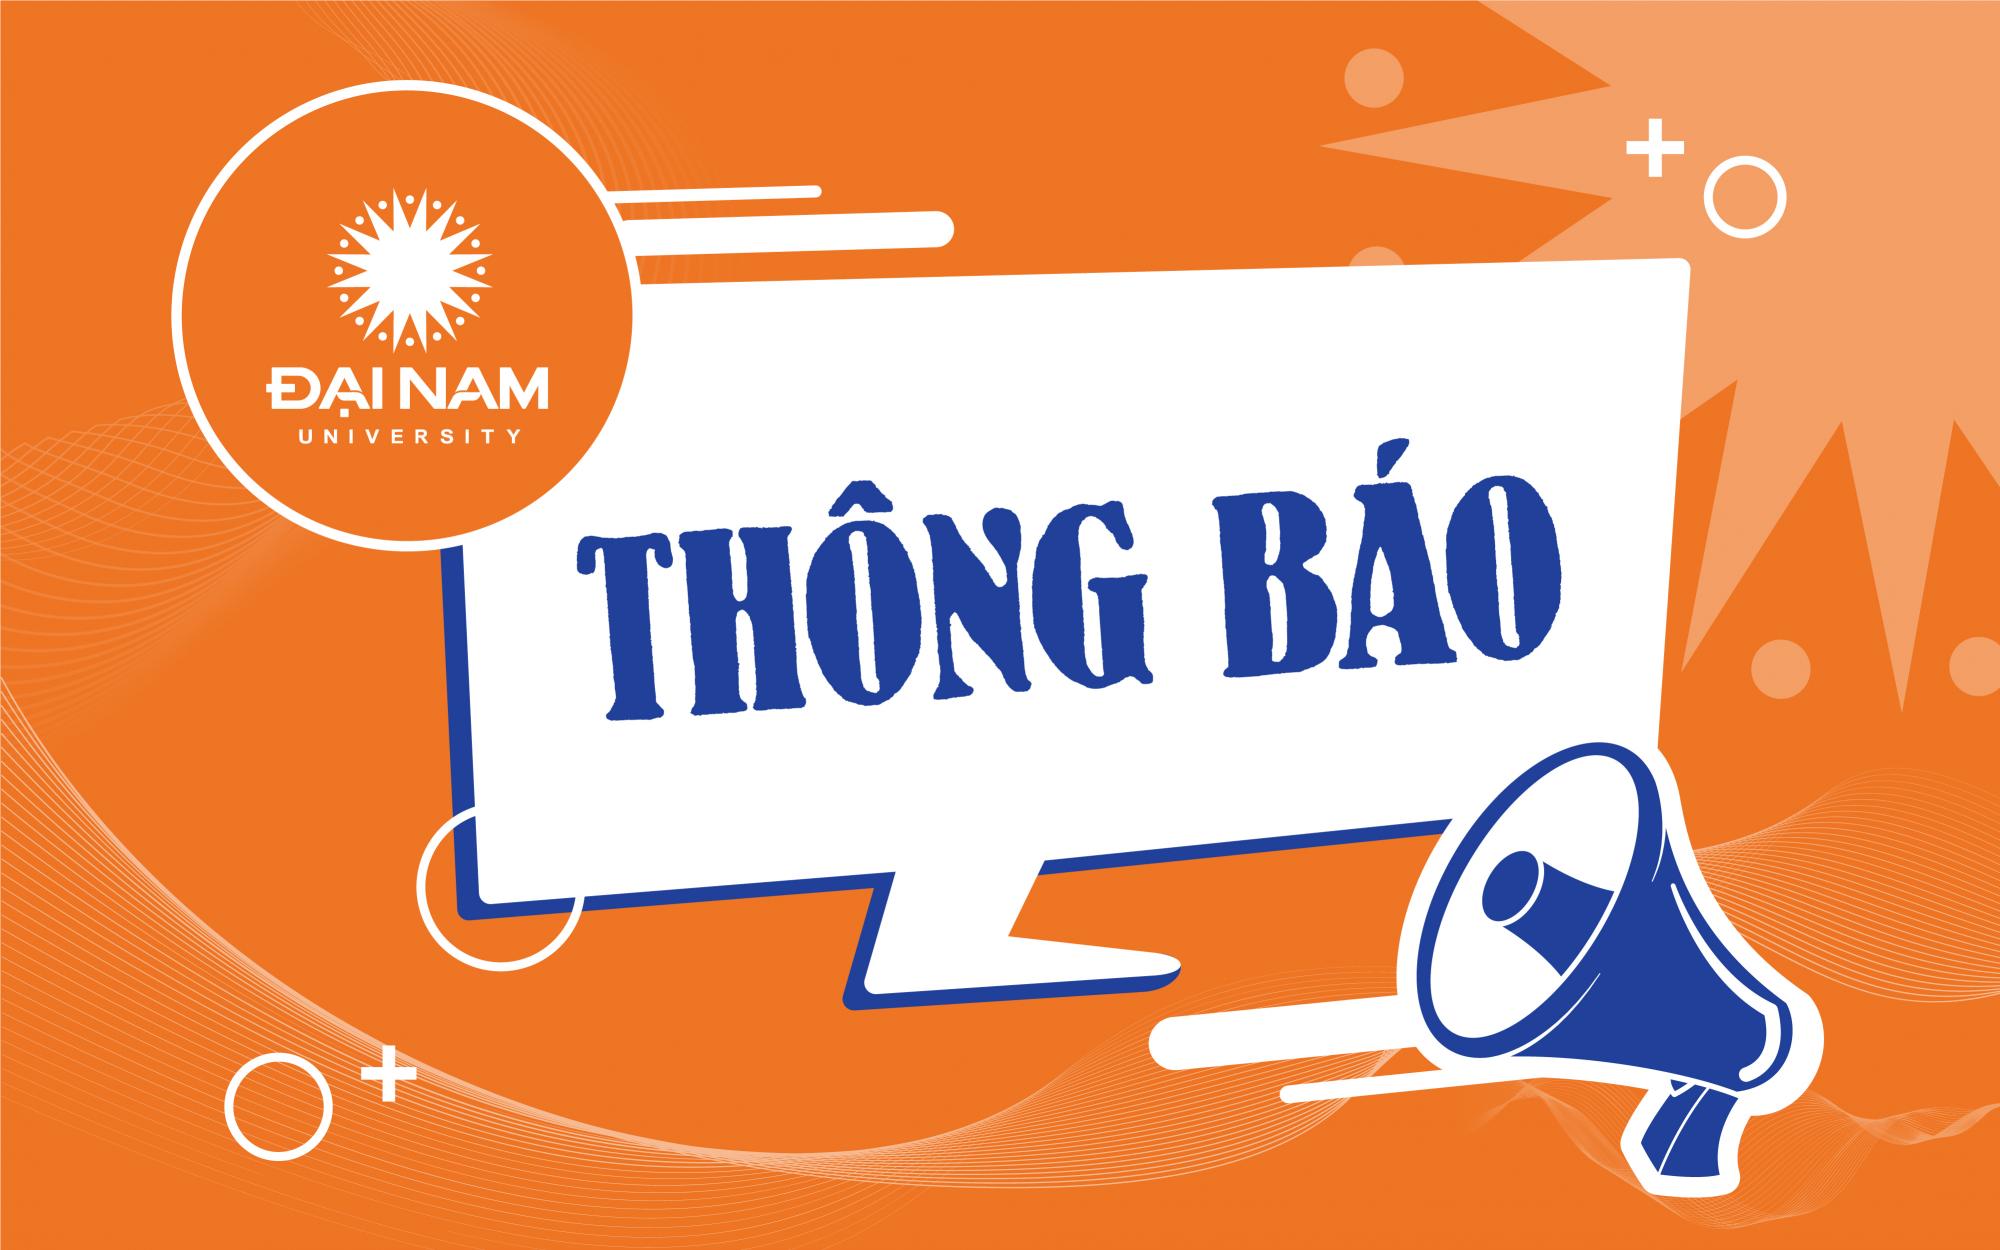 thong-bao-to-chuc-on-thi-toeic-dieu-kien-tot-nghiep-cho-sinh-vien-trinh-do-dai-hoc